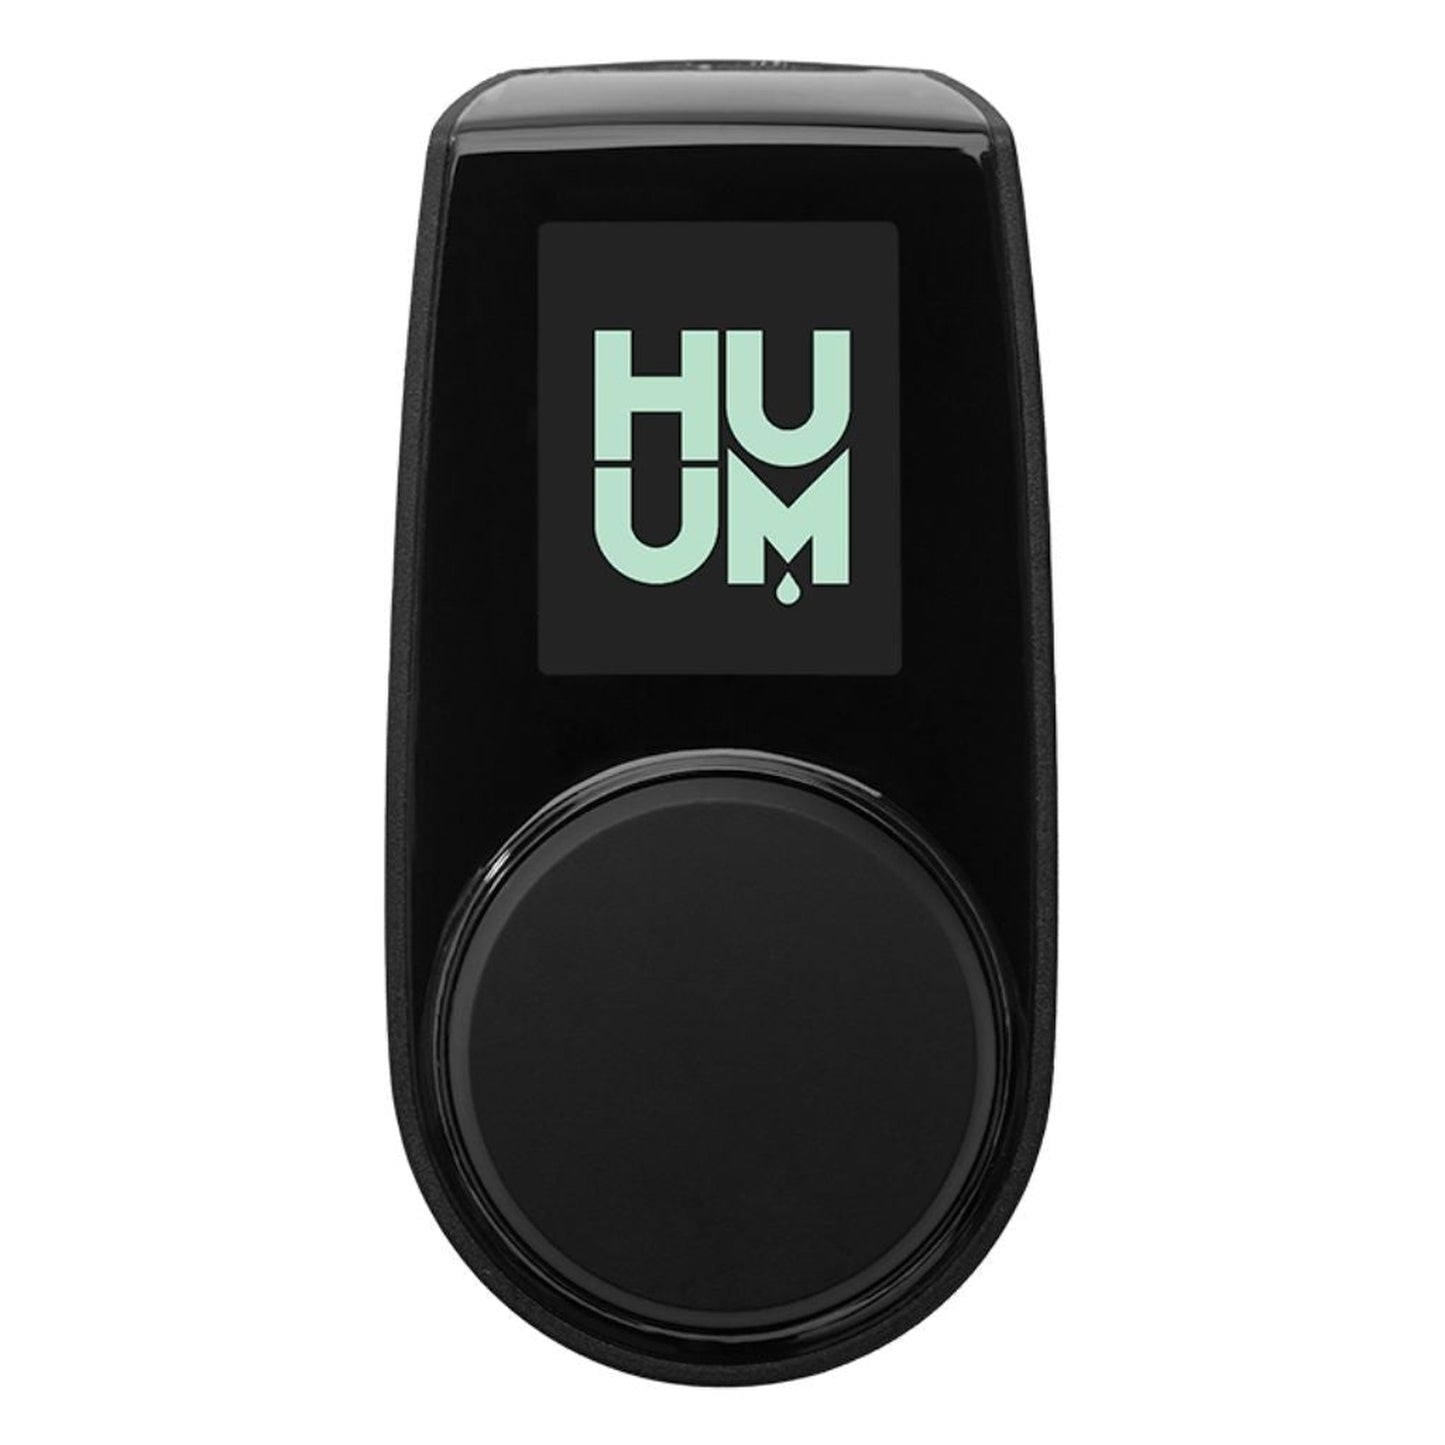 HUMM UKU WiFi 2" x 1" x 4" Digital On - Off, Time, Temperature Controller For Sauna Heater